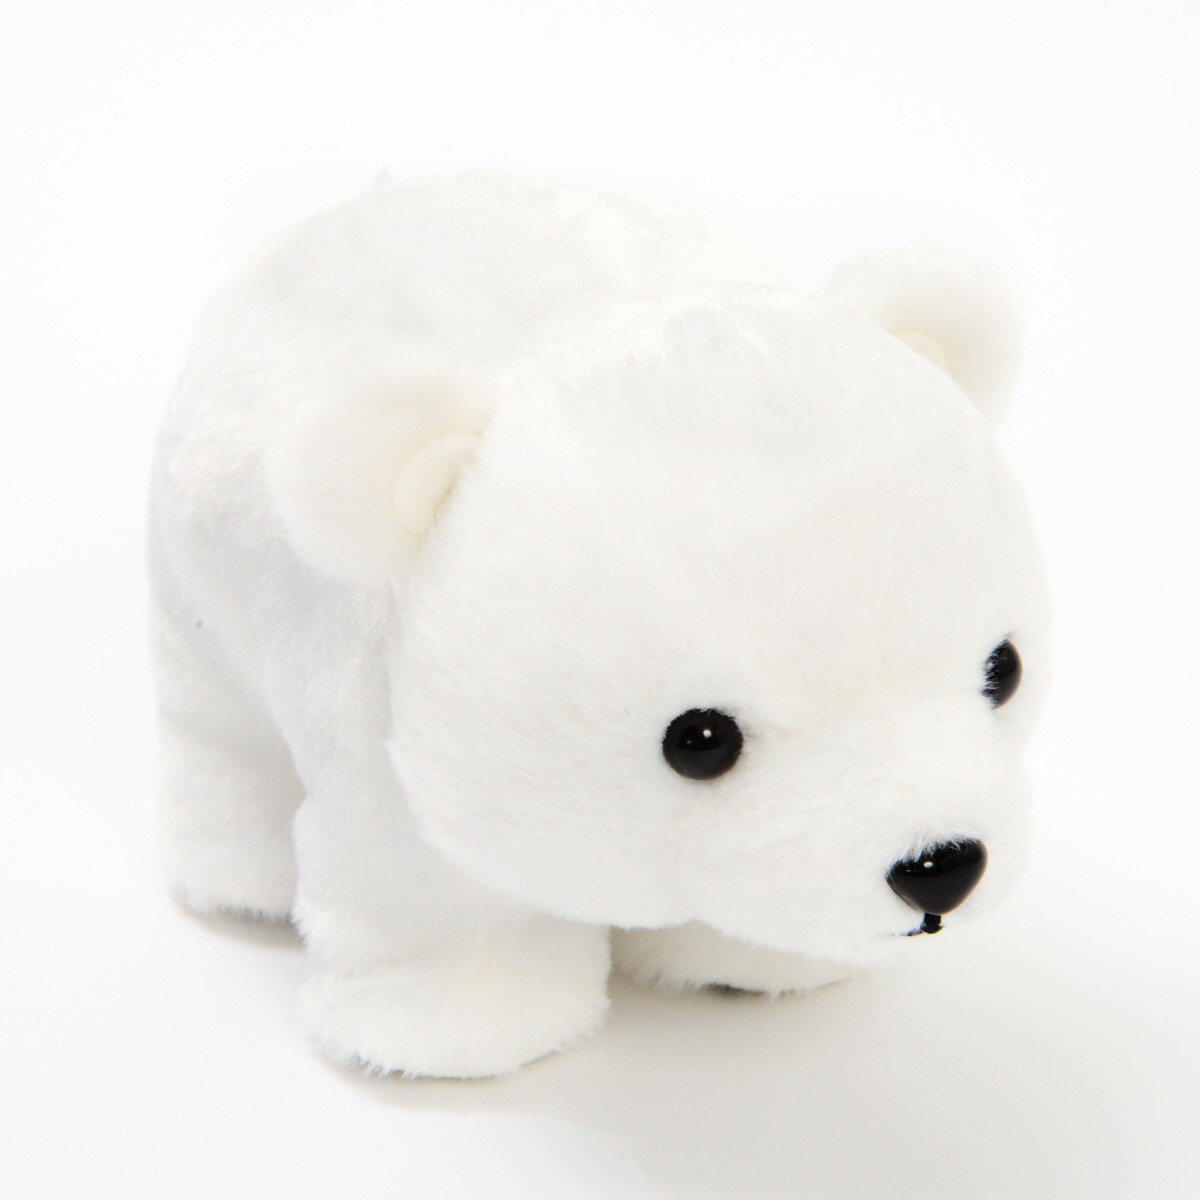 polar bear plush